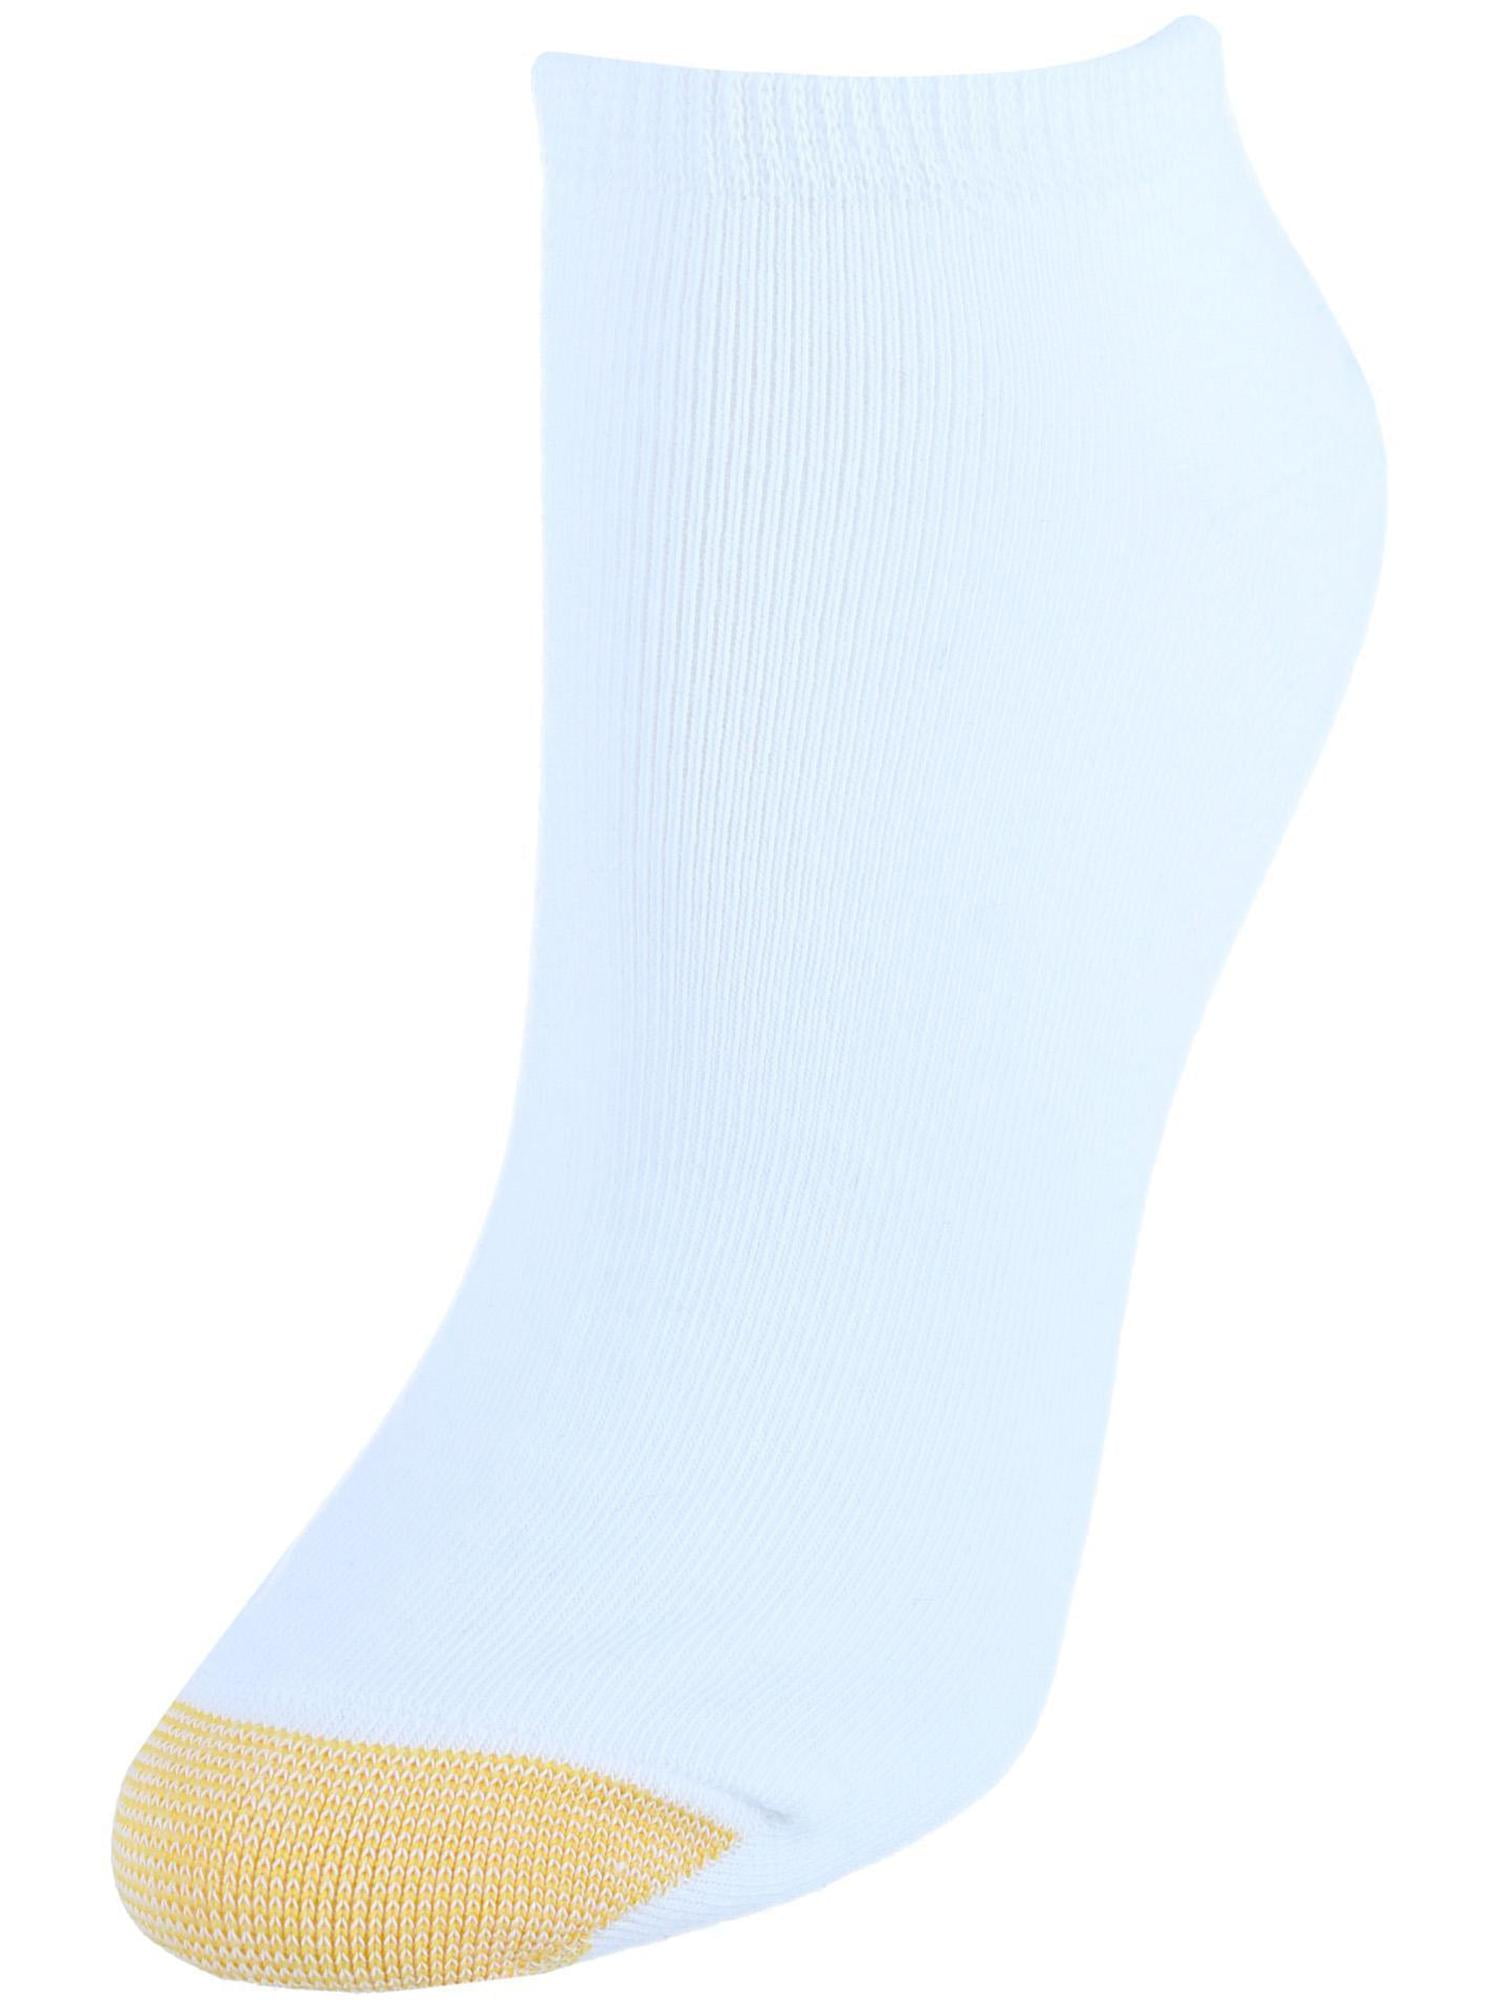 6 Pairs Gold Toe womens Invisible Socks